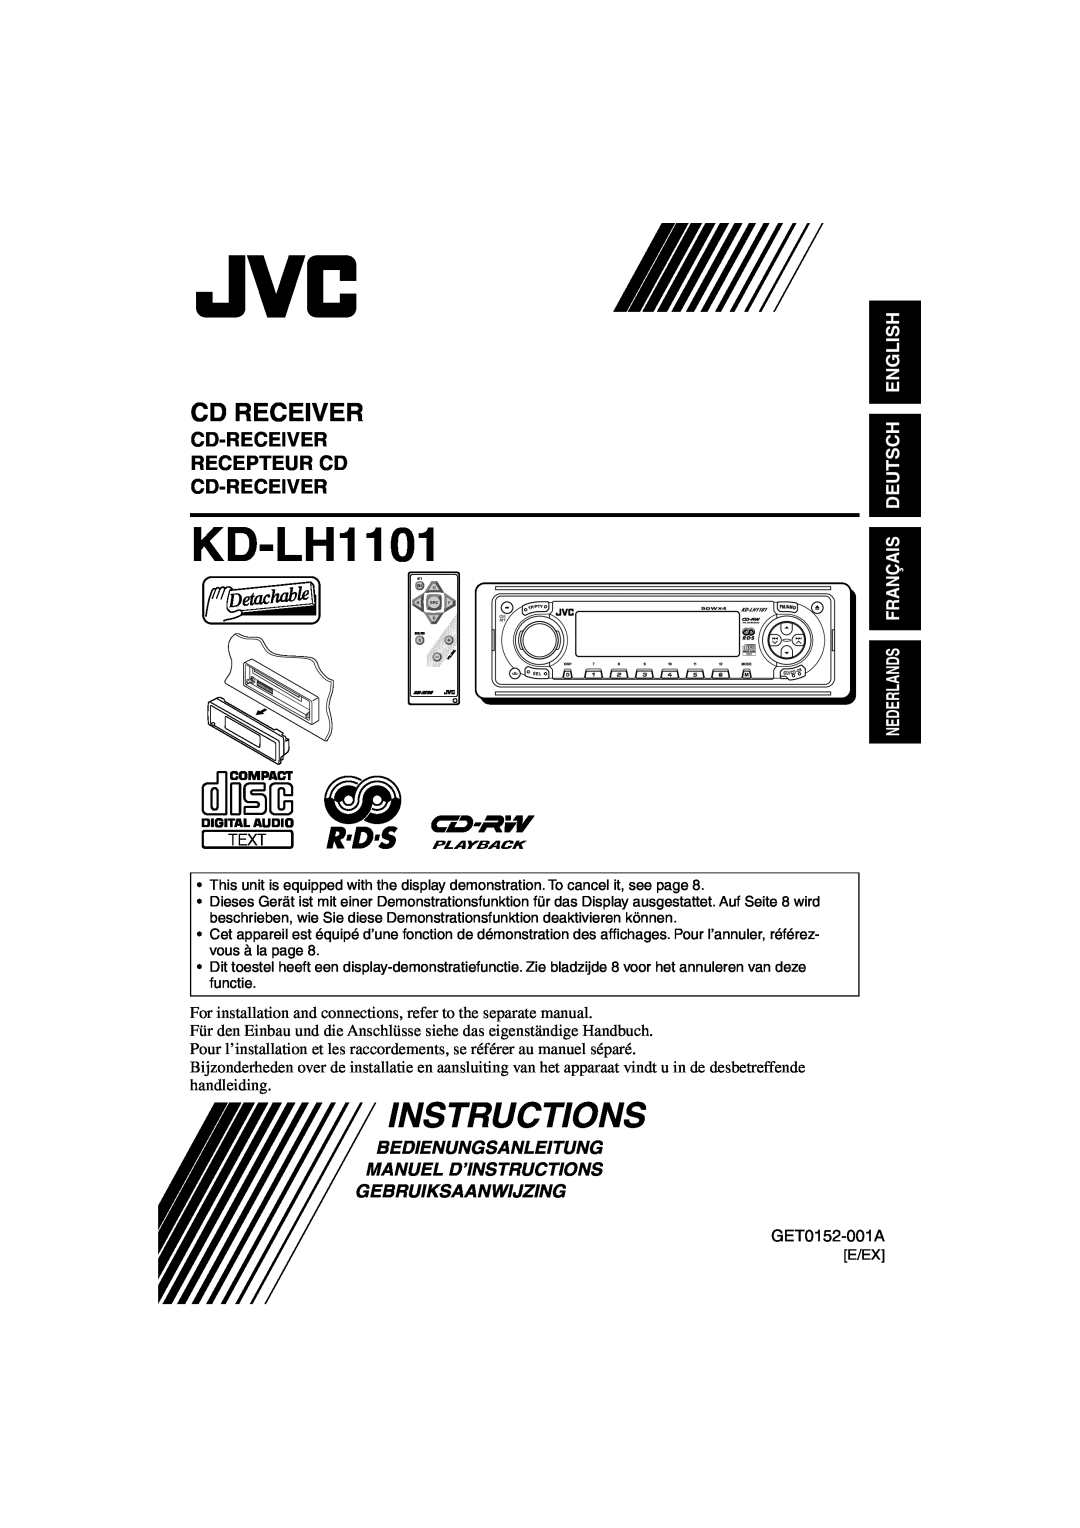 JVC KD-LH1101 manual Cd Receiver, Cd-Receiver Recepteur Cd Cd-Receiver, Instructions, English Deutsch, Gebruiksaanwijzing 